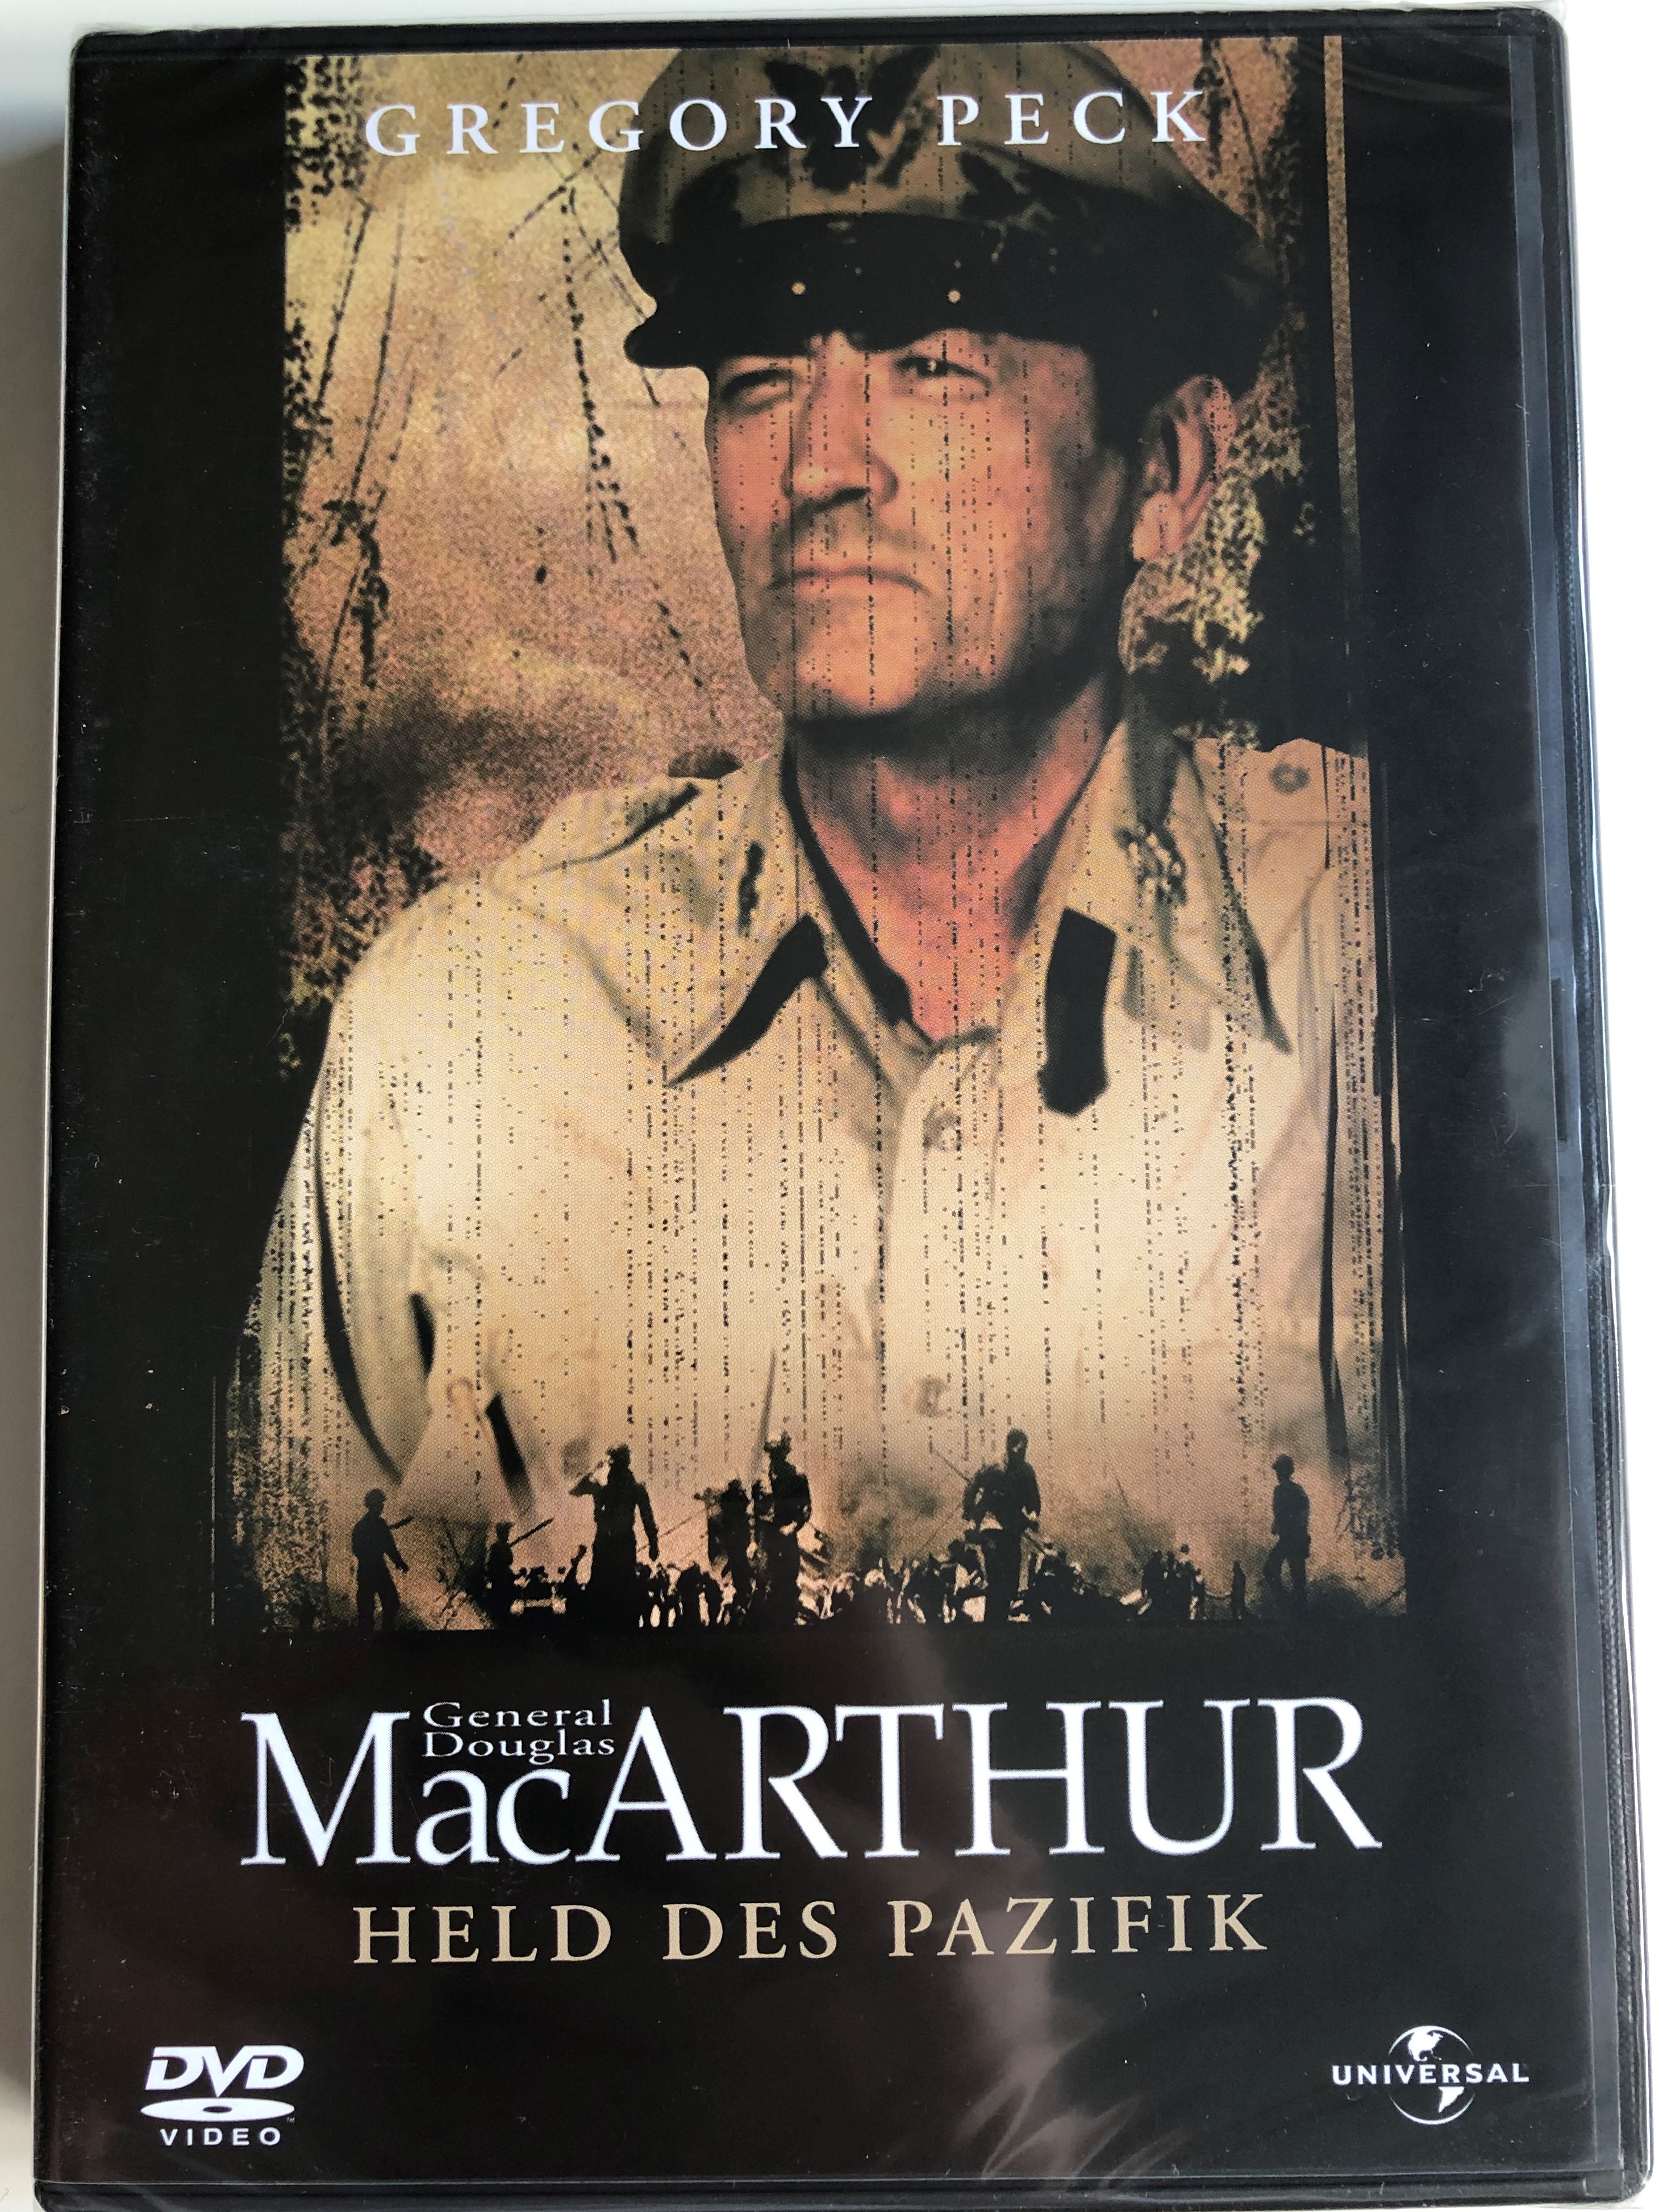 -macarthur-dvd-1977-general-douglas-macarthur-held-des-pazifik-directed-by-joseph-sargent-starring-gregory-peck-ed-flanders-dan-o-herlihy-1-.jpg